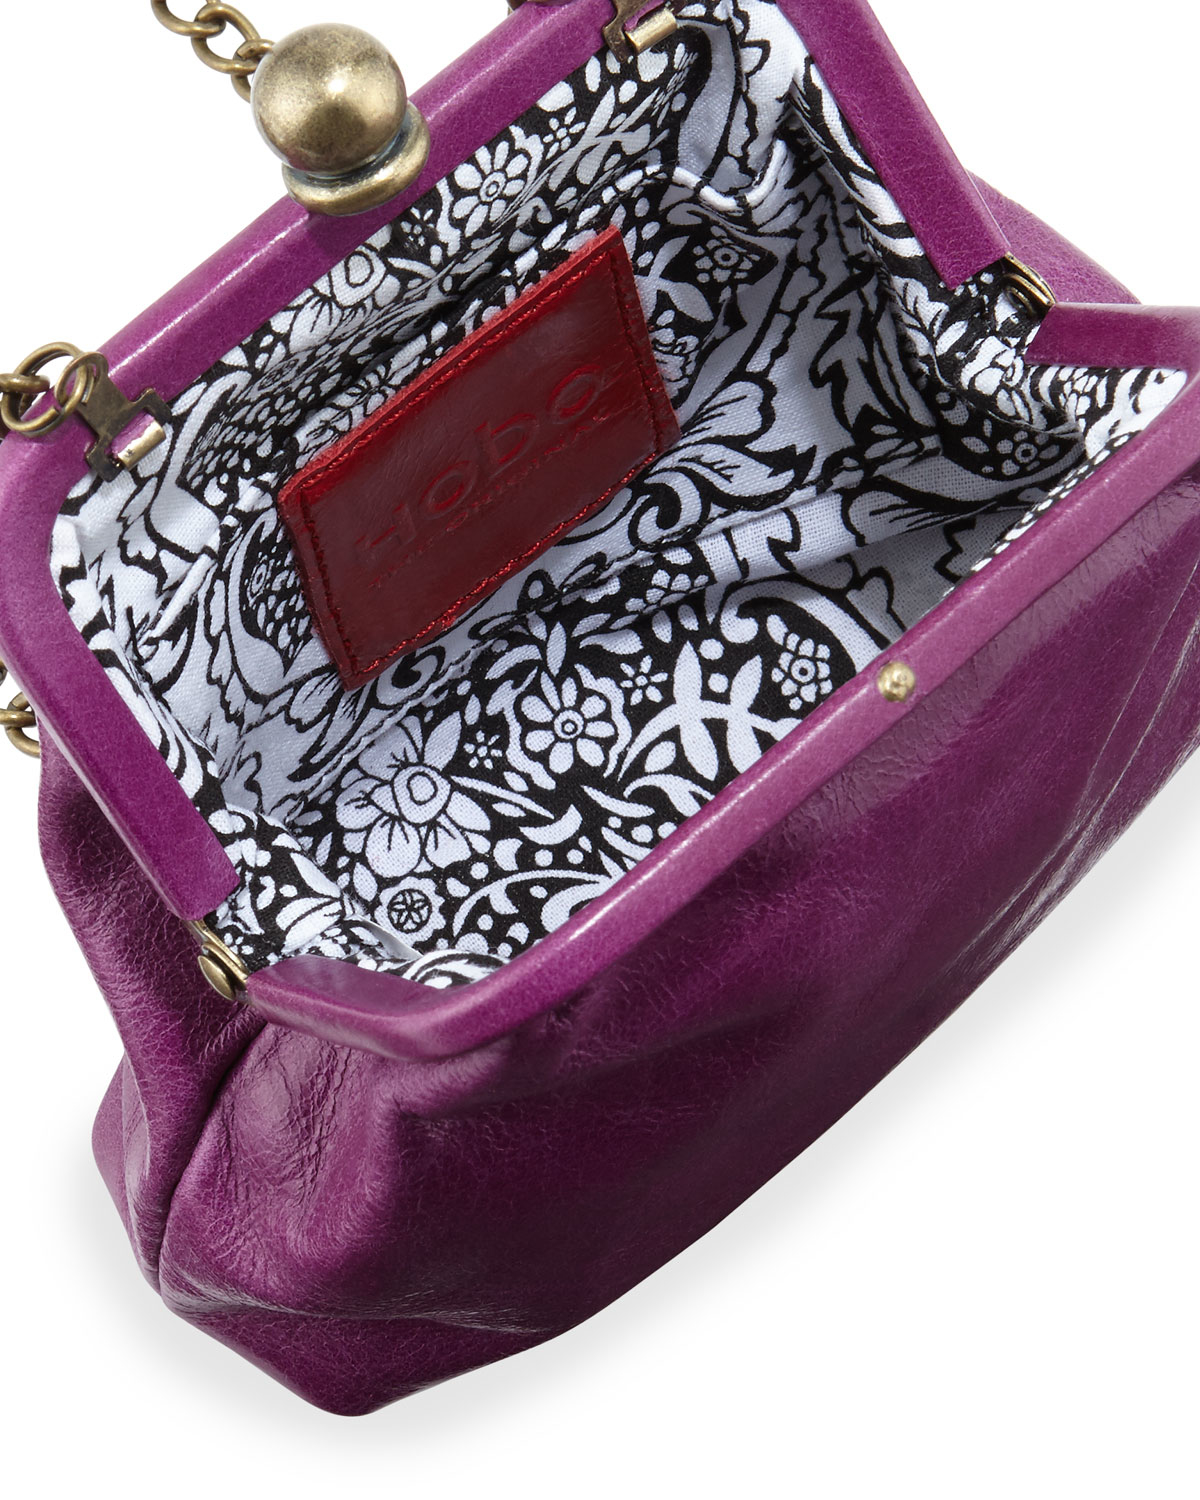 Hobo Leather Libby Mini Crossbody Frame Bag in Violet (Purple) - Lyst